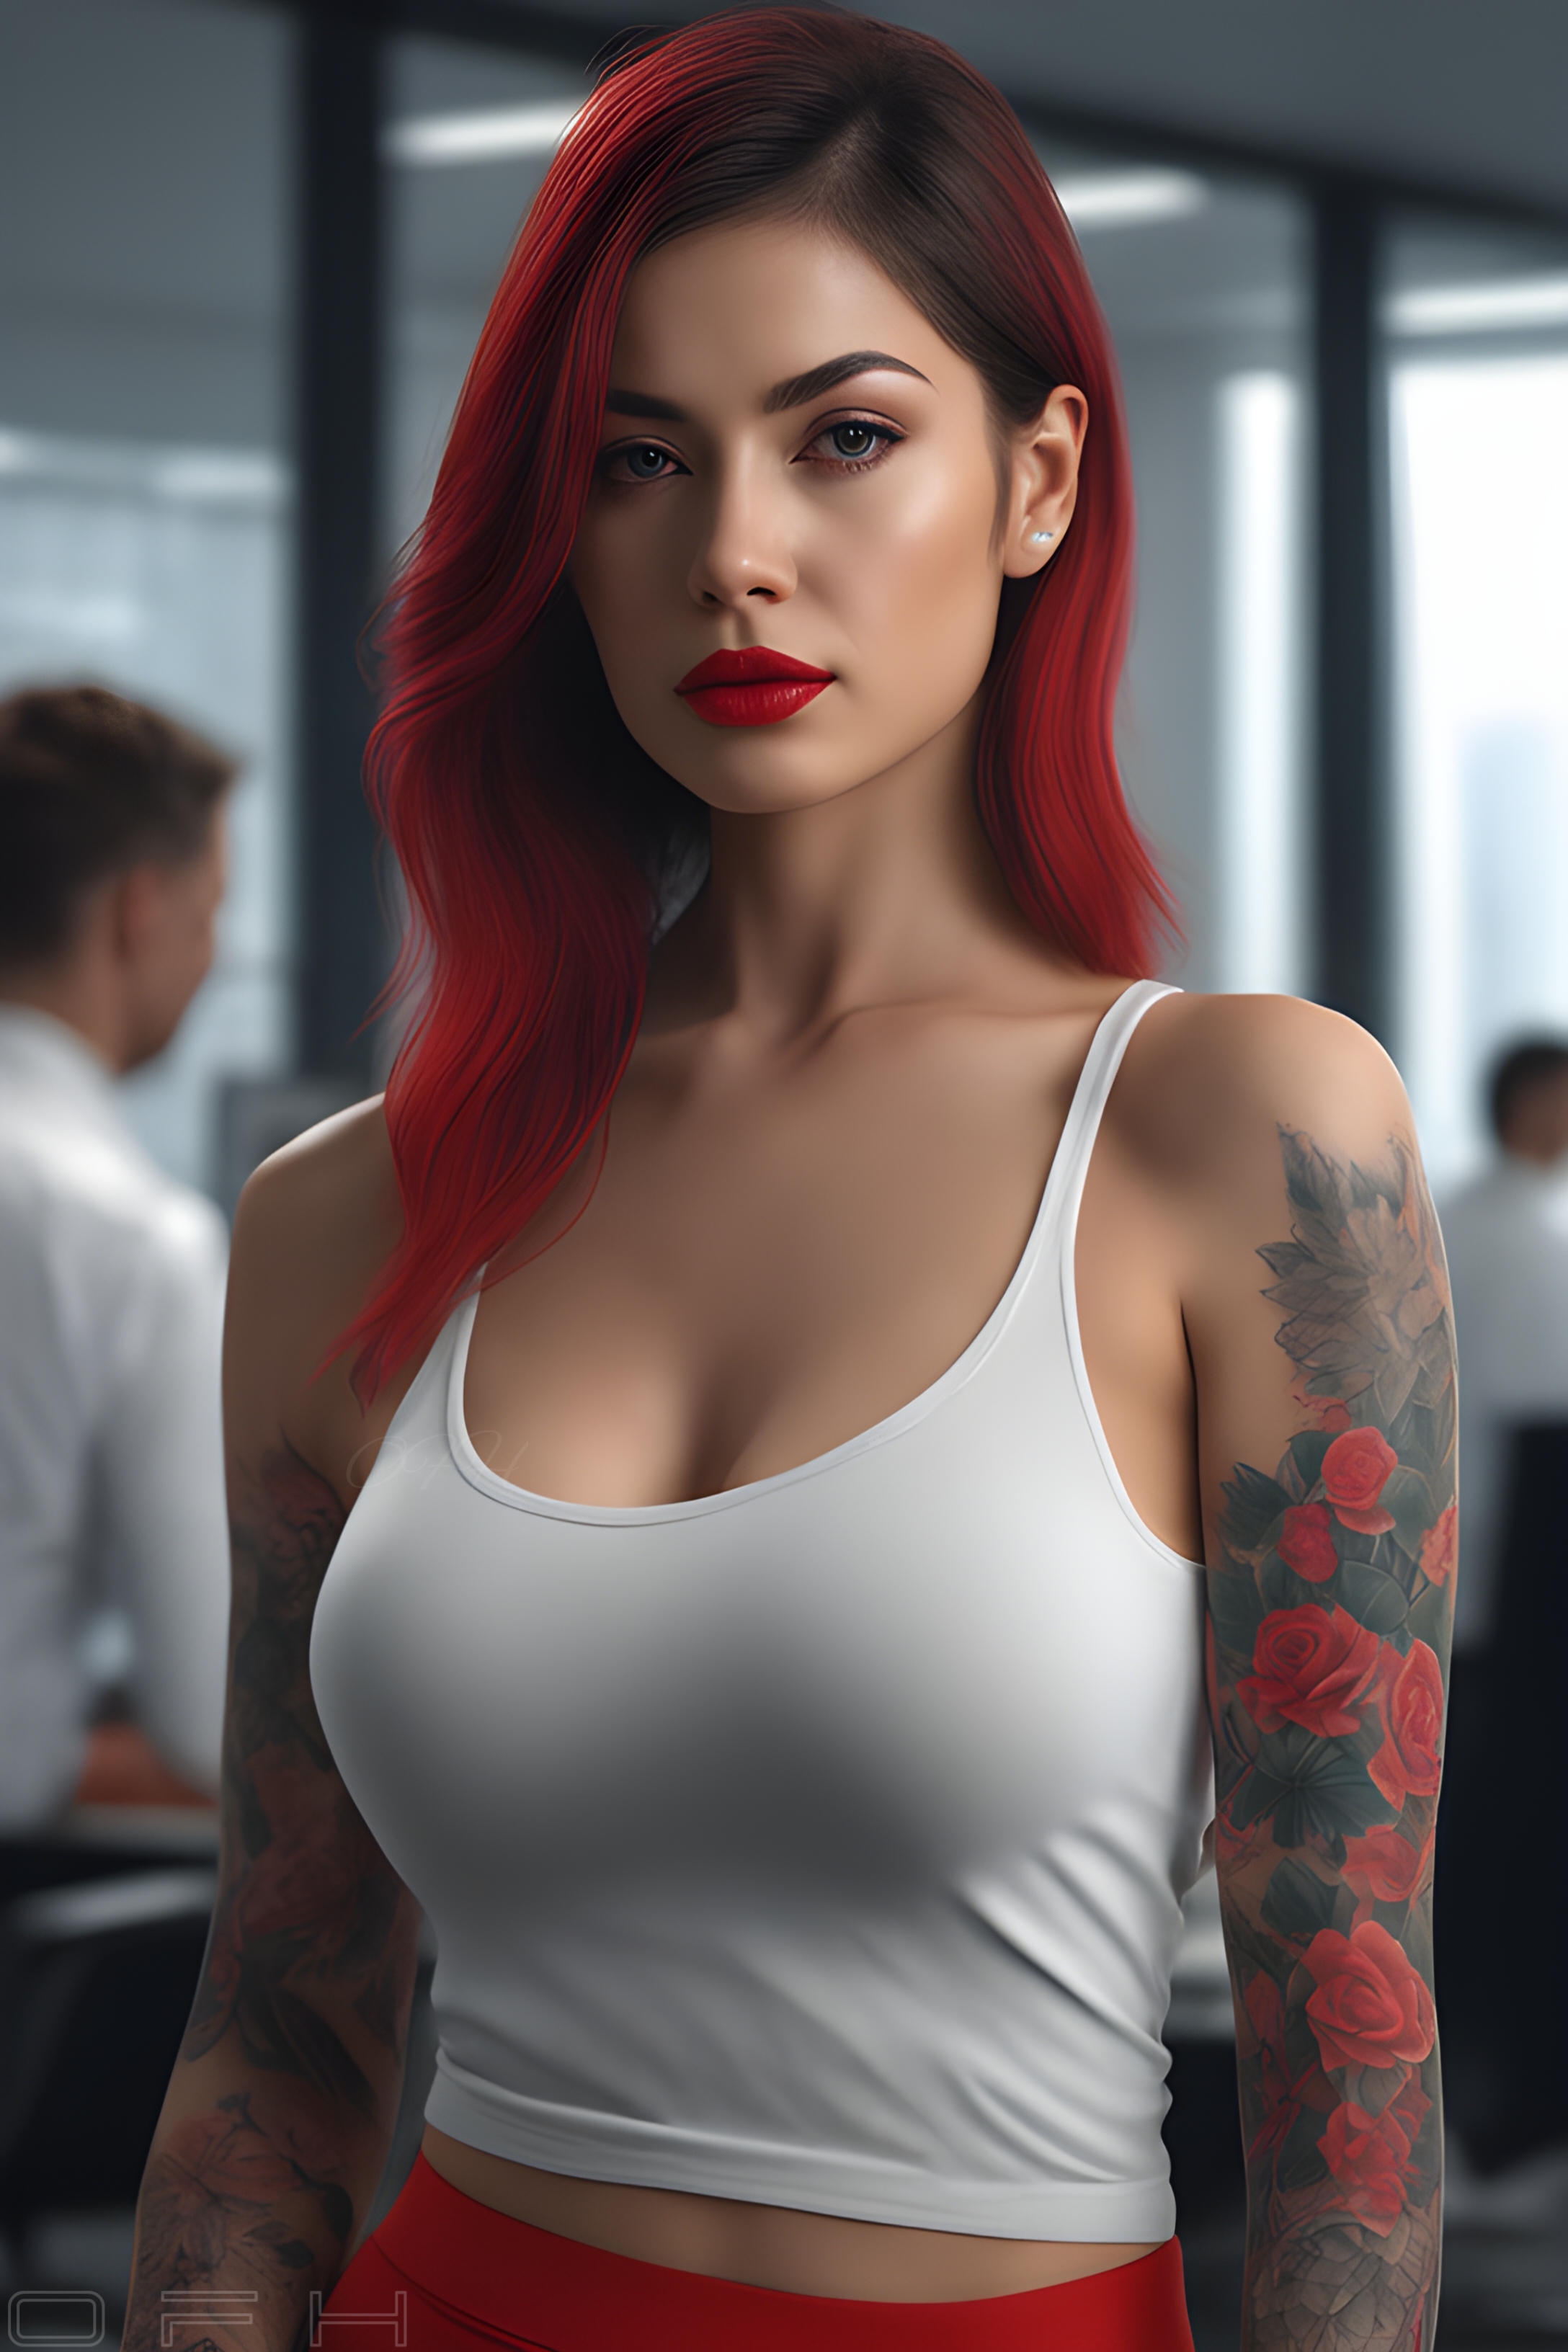 General 2176x3264 AI art OneFinalHug digital art tattoo fantasy girl portrait display gradient hair two tone hair looking at viewer lipstick red lipstick bare shoulders